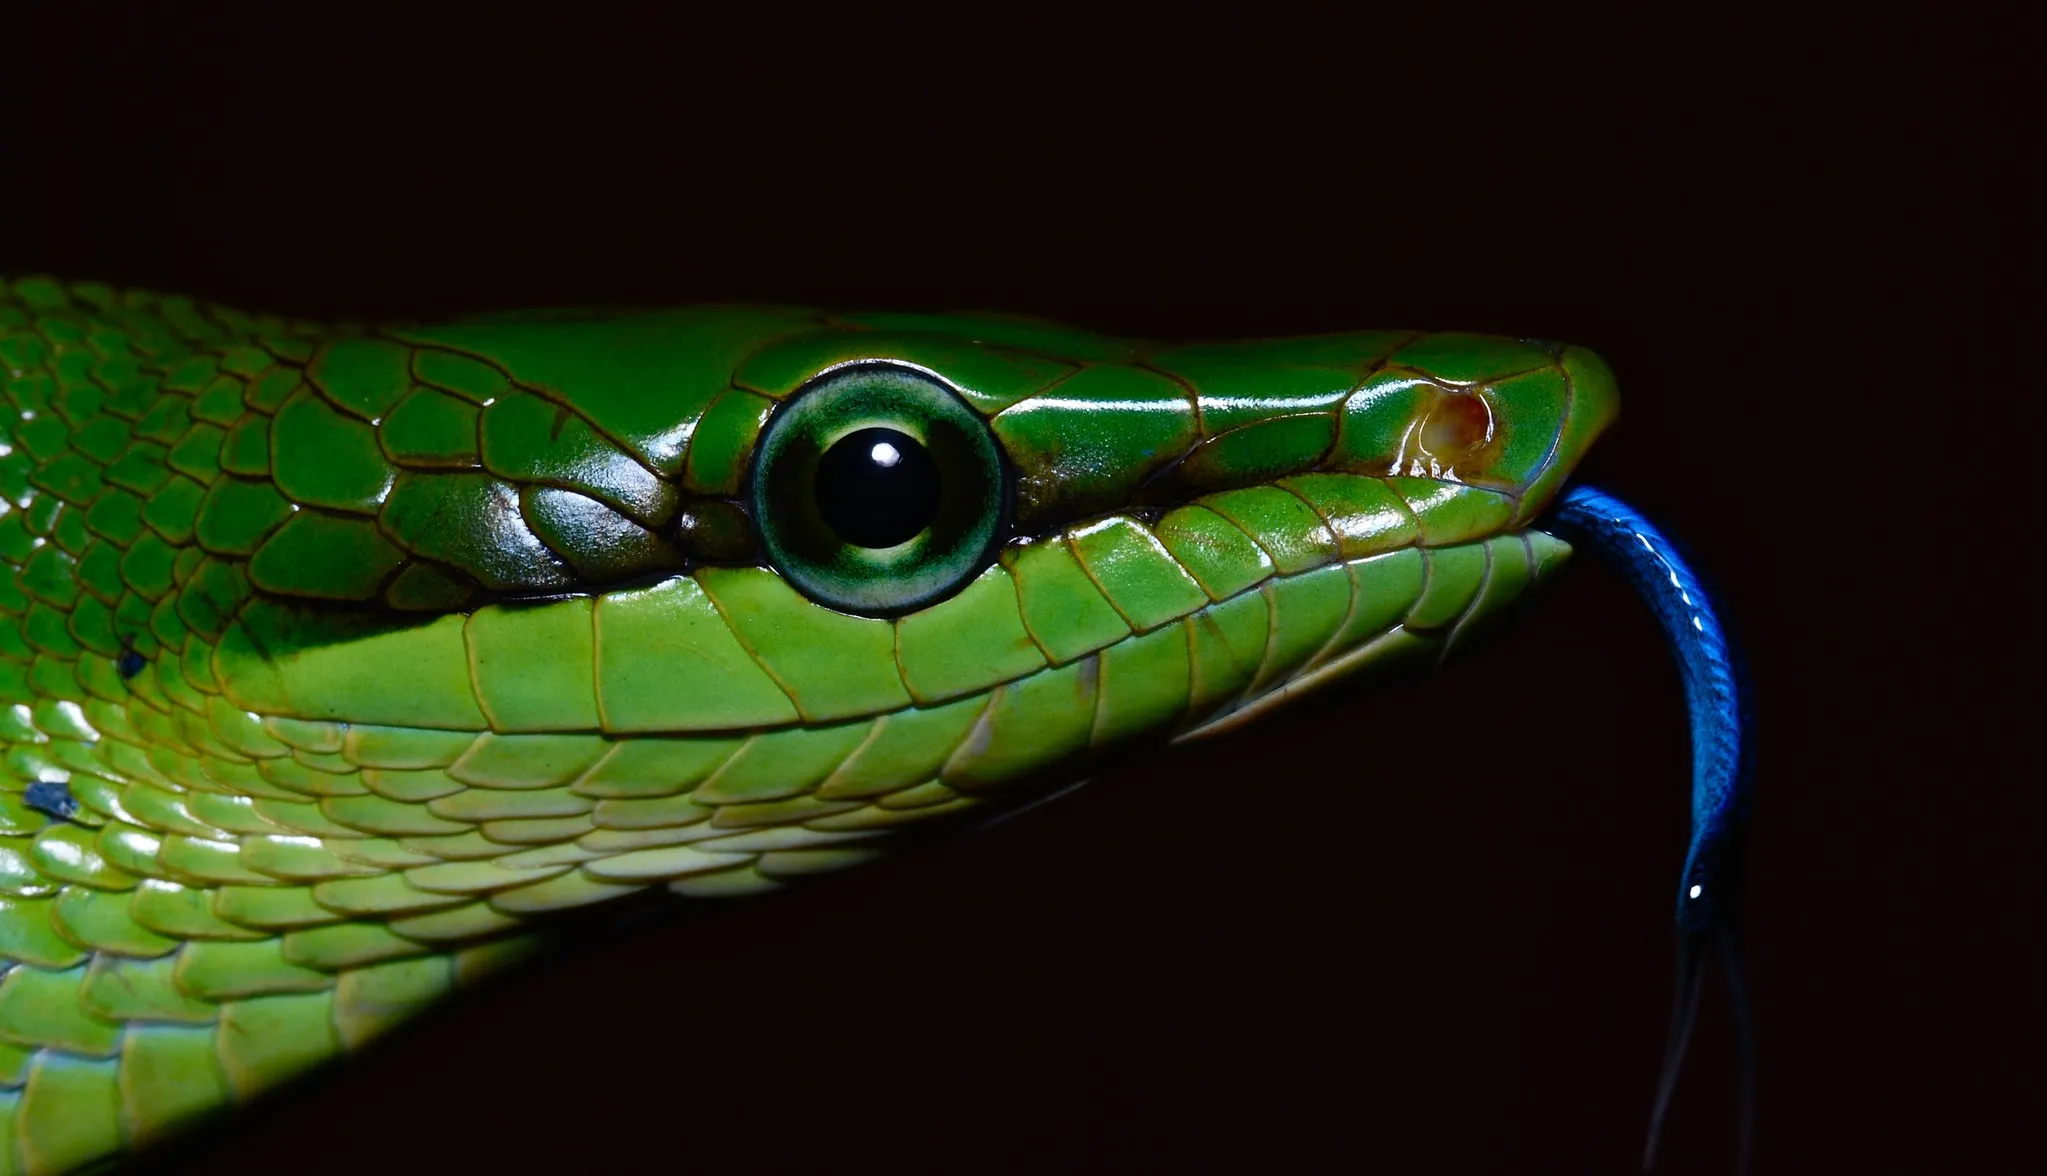 Green Rat Snake Facts